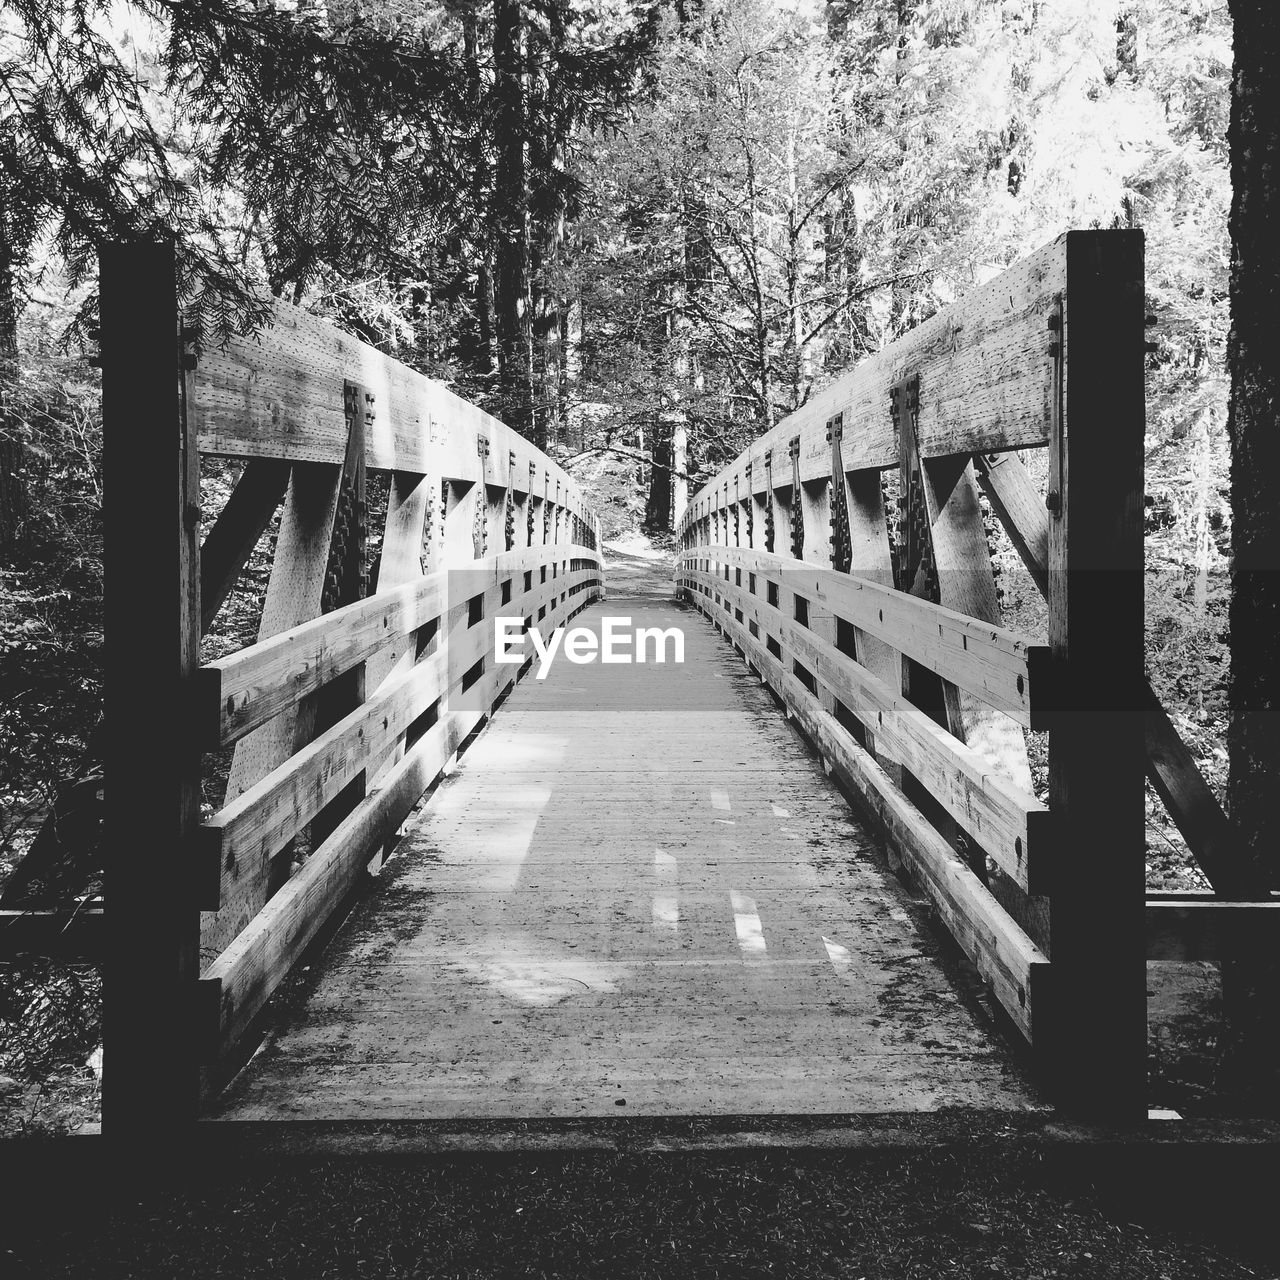 Footbridge leading towards forest